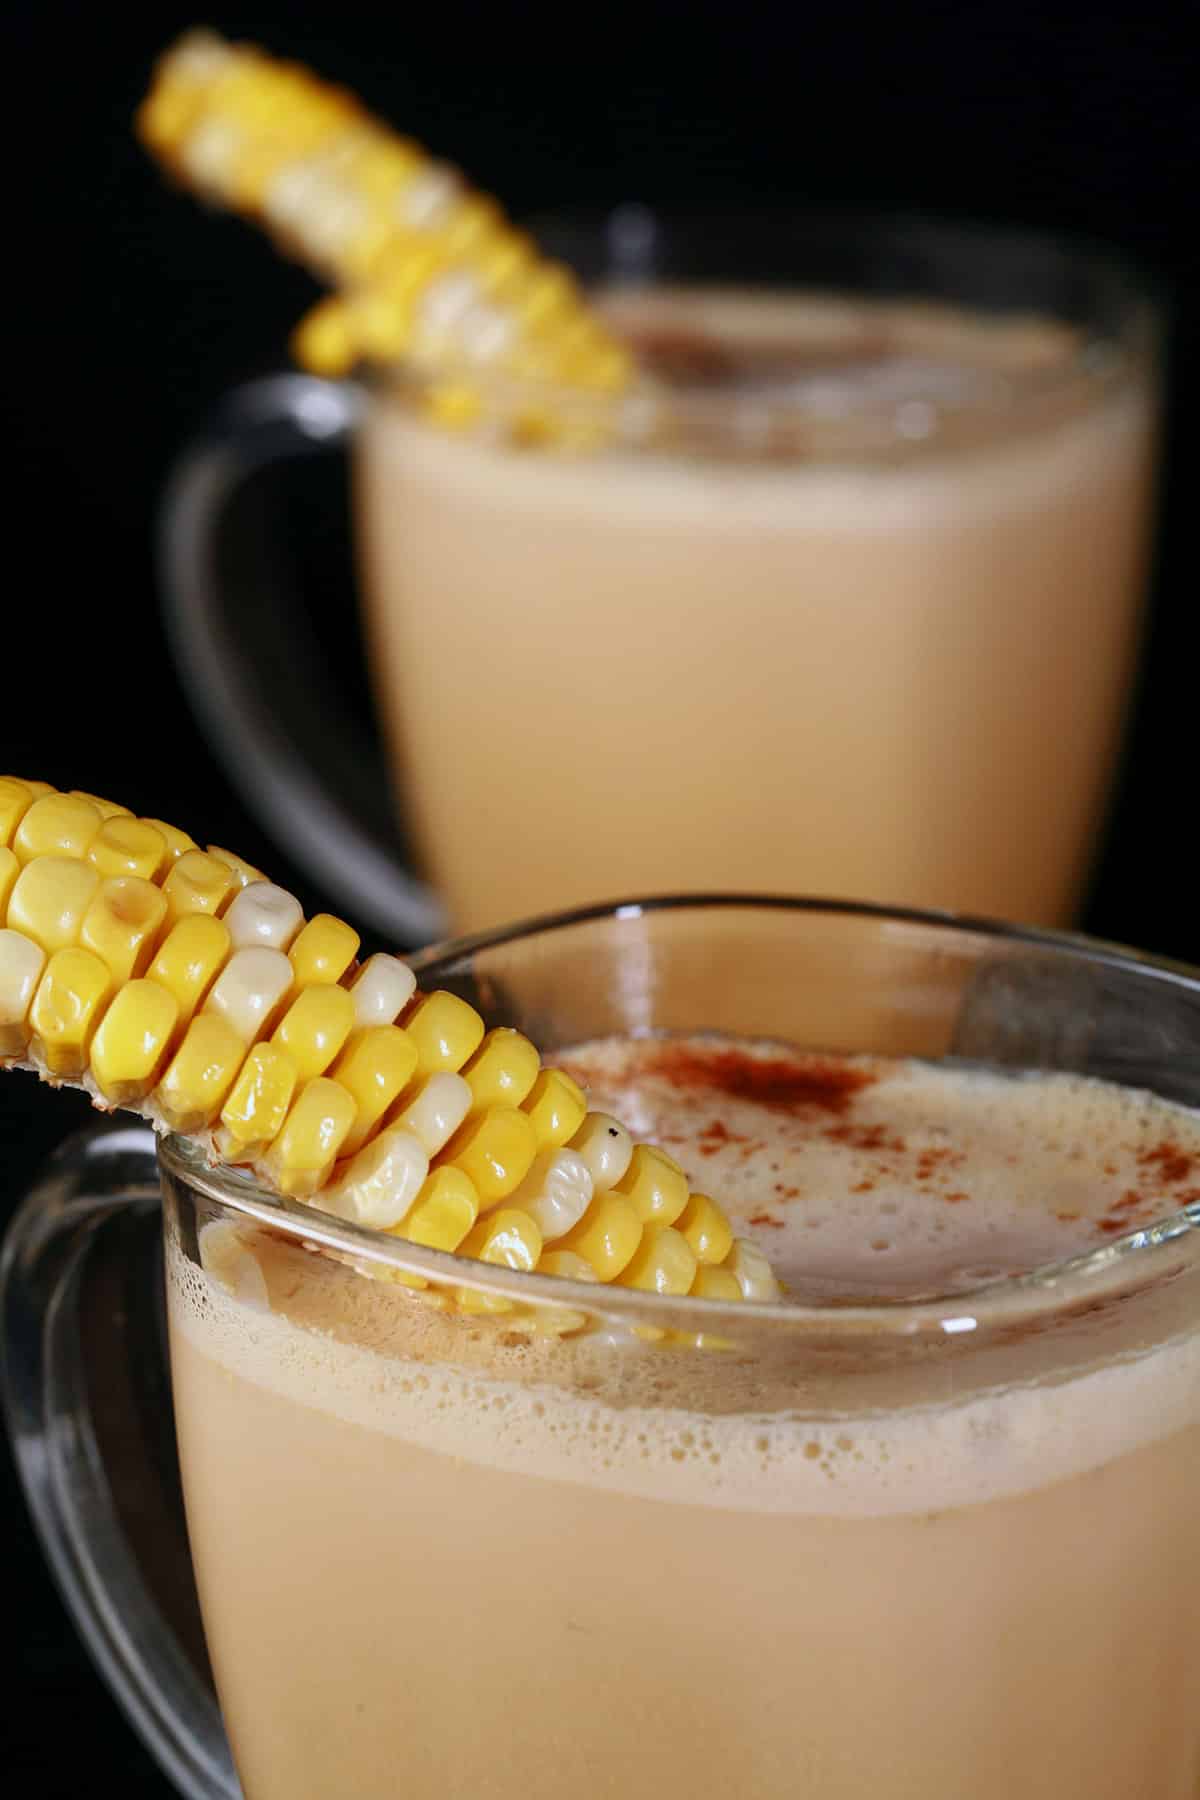 Corn cappuccino servings in clear mugs.